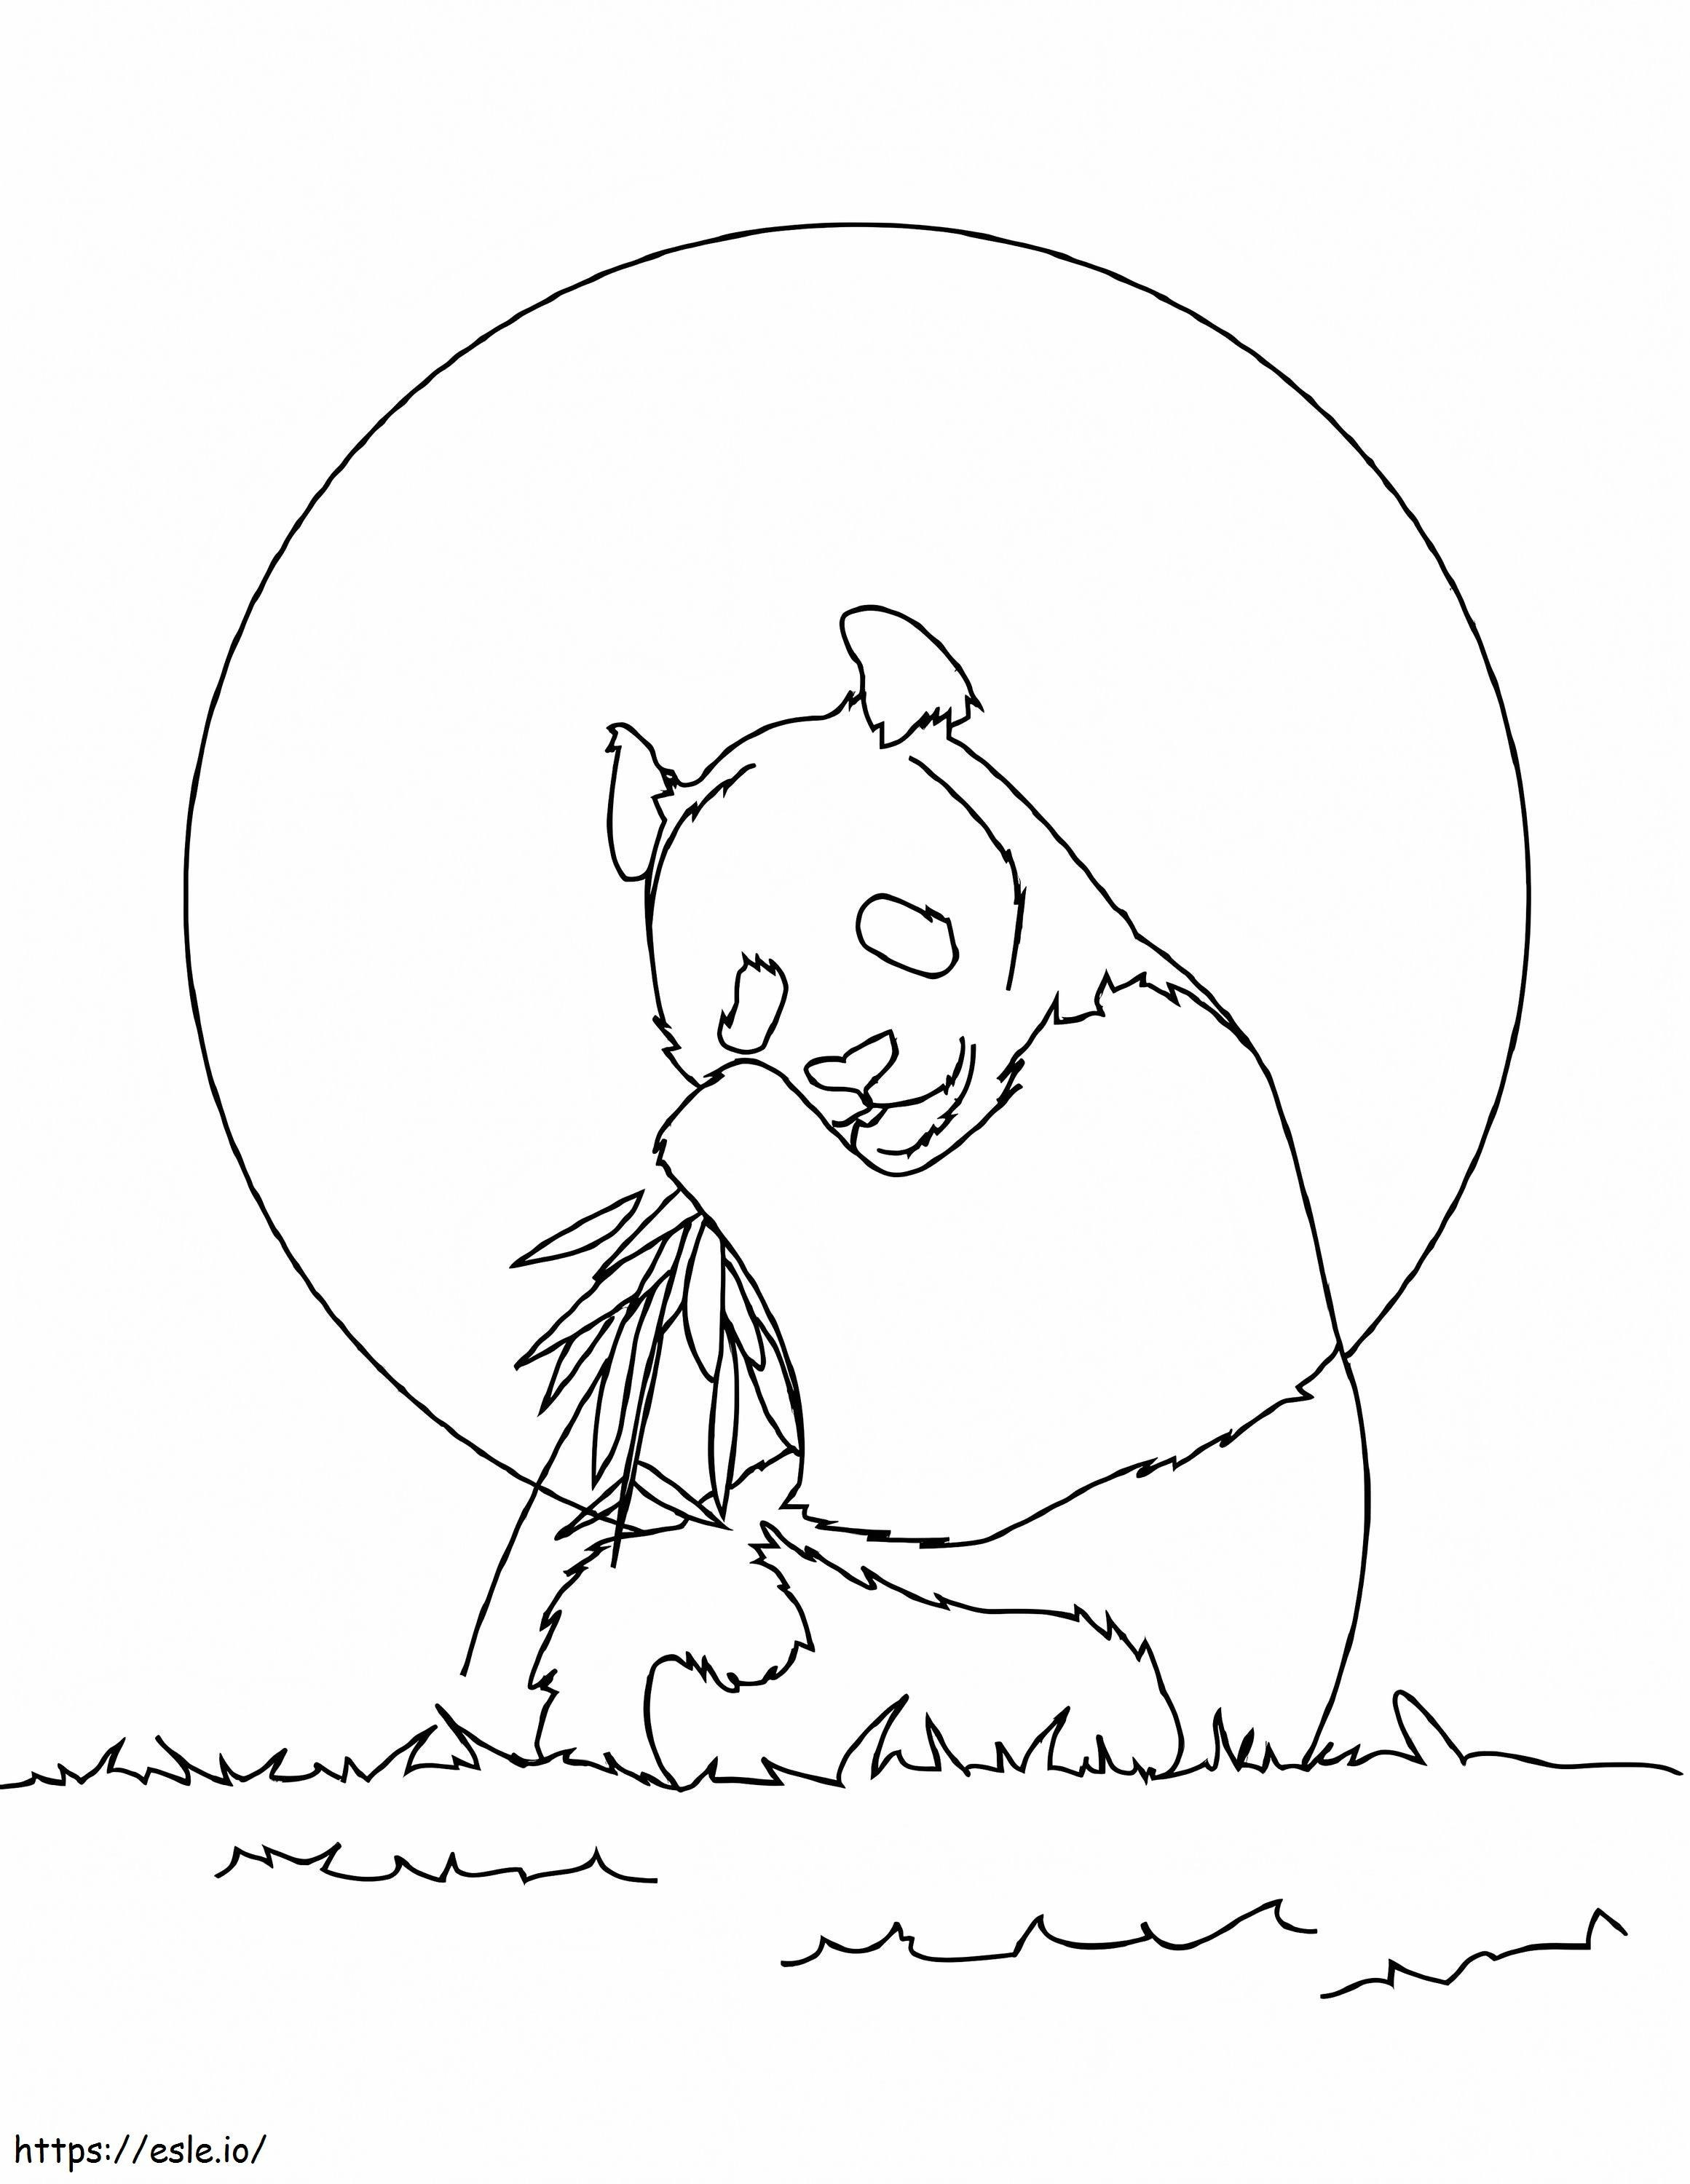 Panda Sitting To Eat Bamboo coloring page